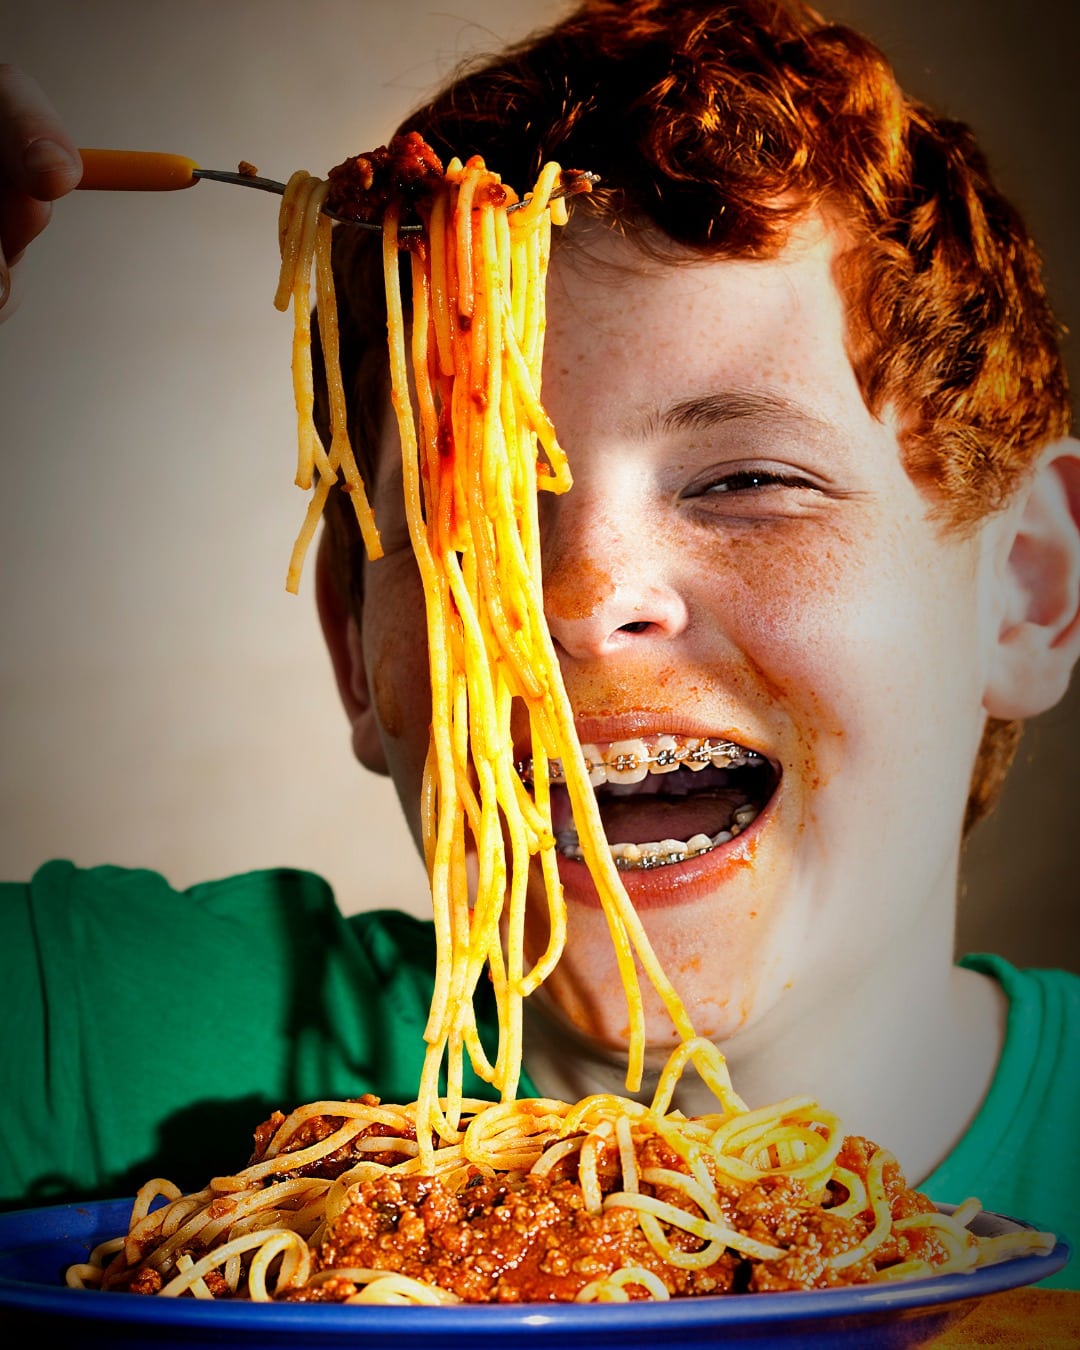 A boy with braces eats spaghetti marinara.